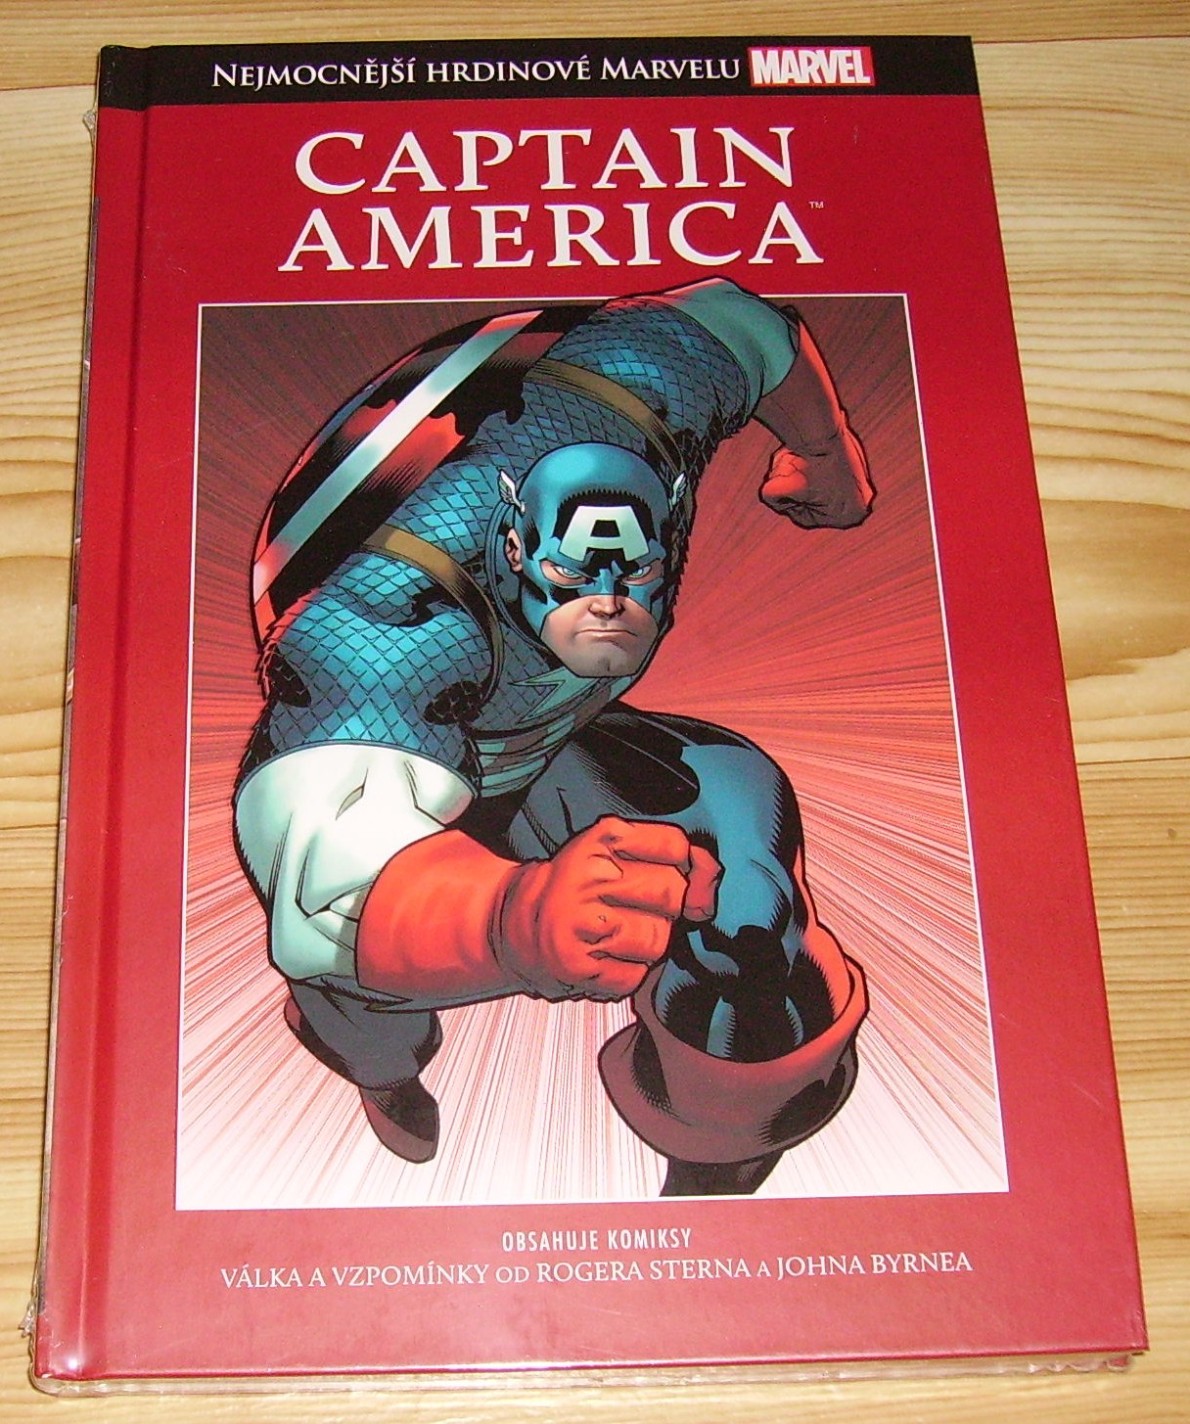 Captain America (NHM 006)